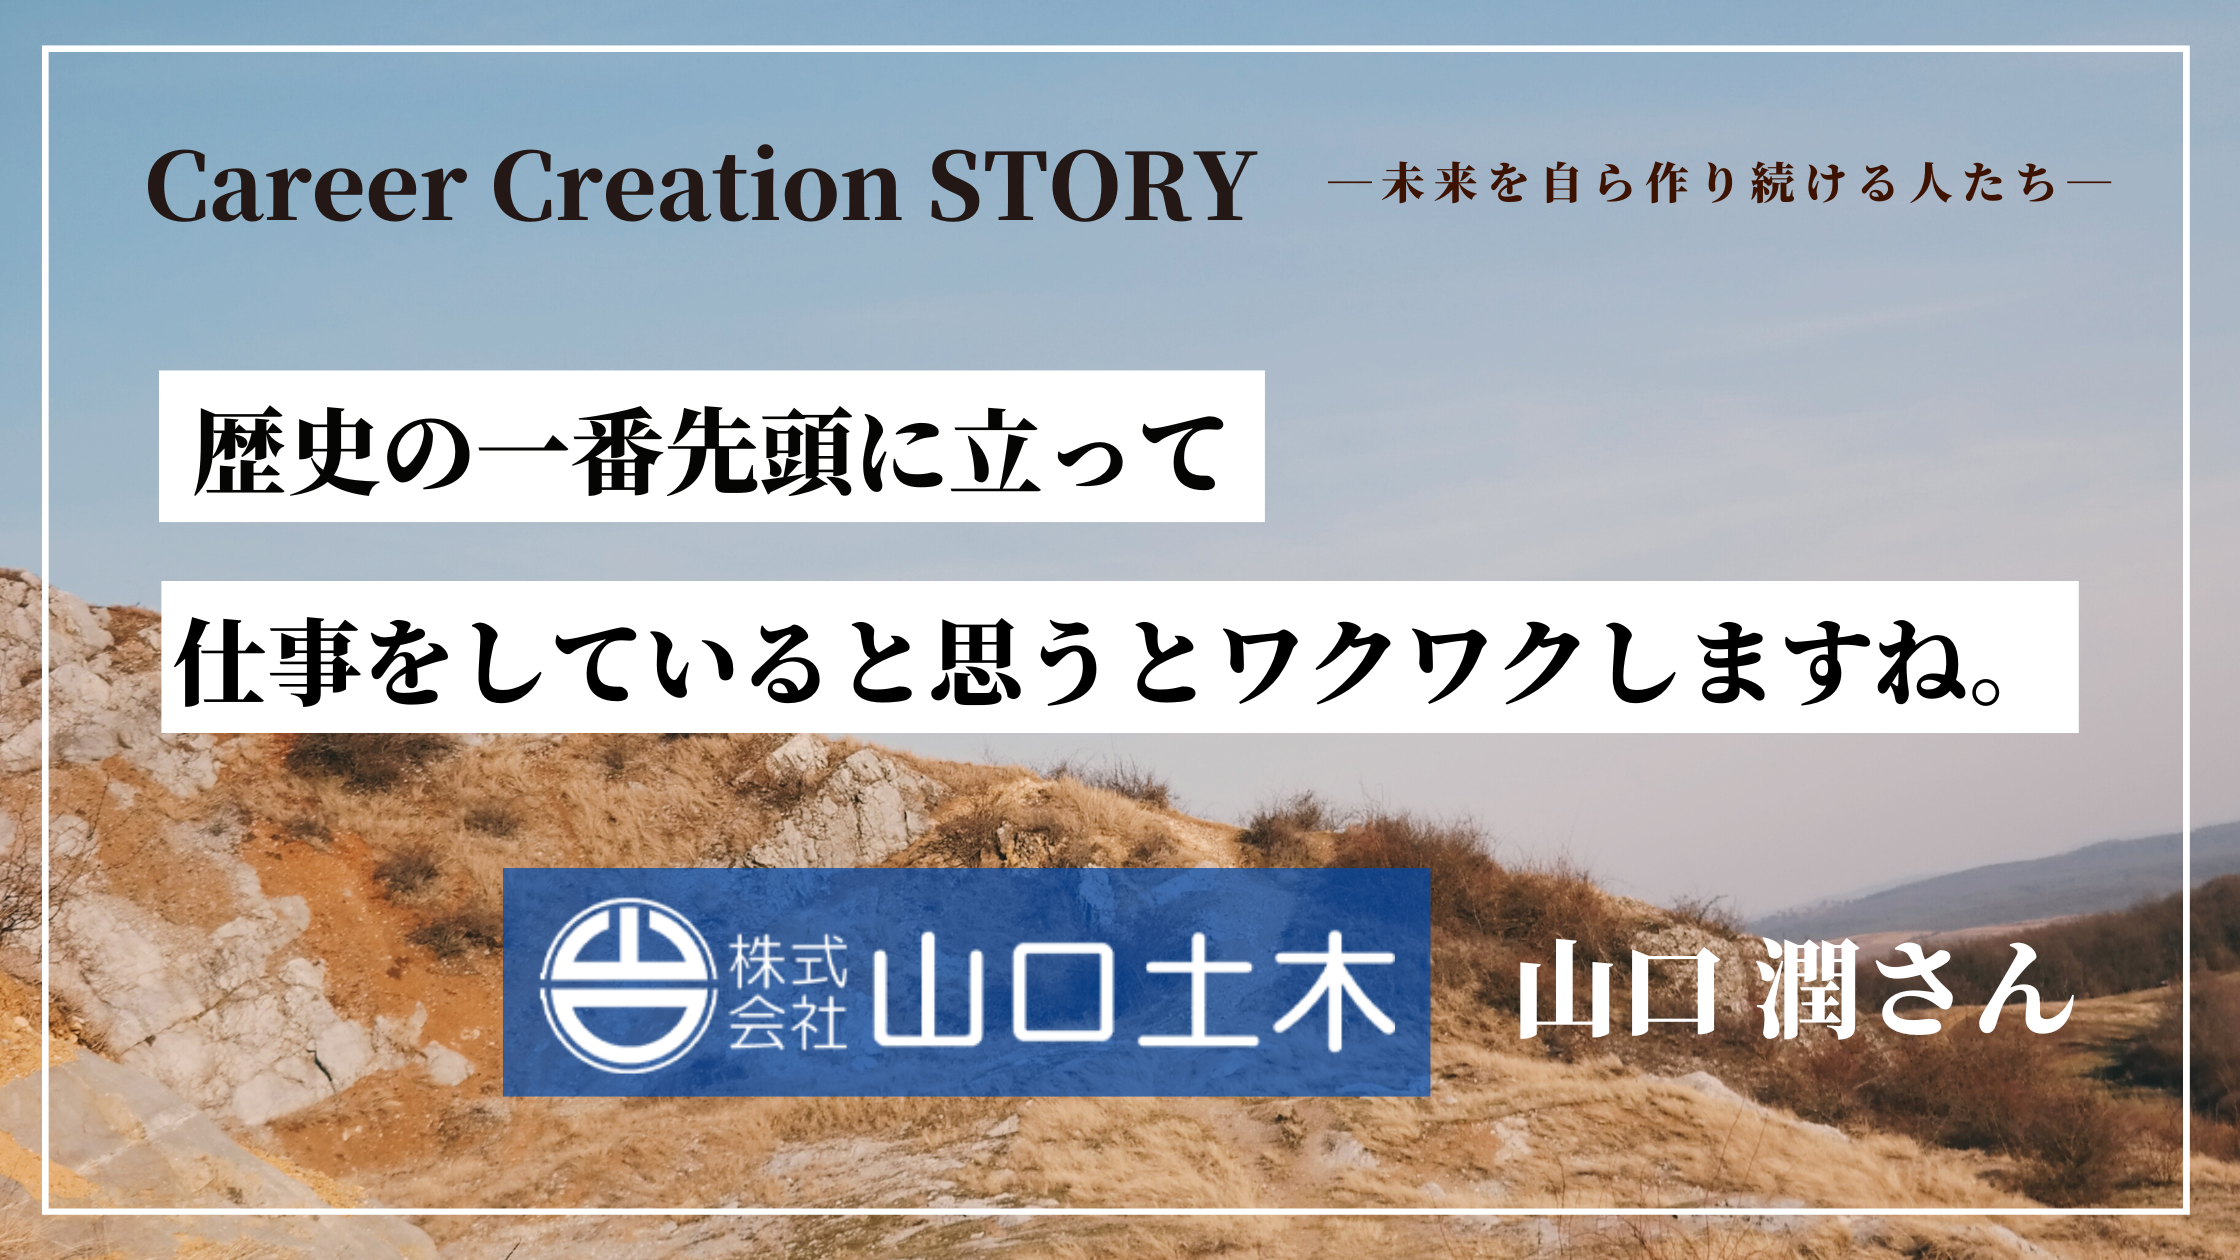 Career Creation STORY #2：ソフトバンク（株）佃直樹さん